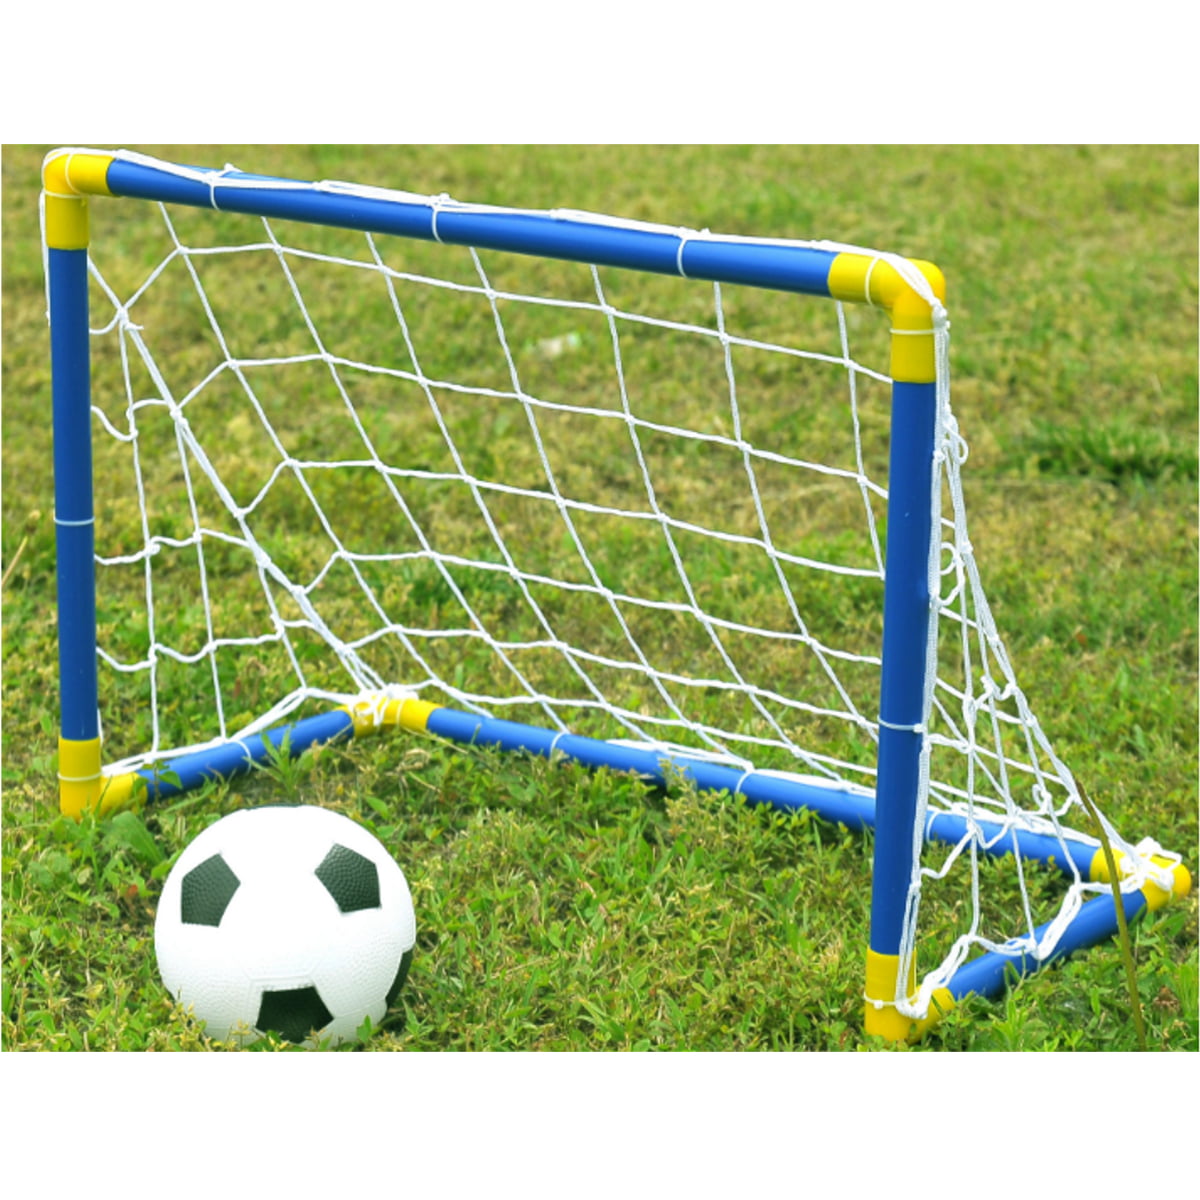 Folding Mini Football Soccer Goal Post Net Set with Pump ...